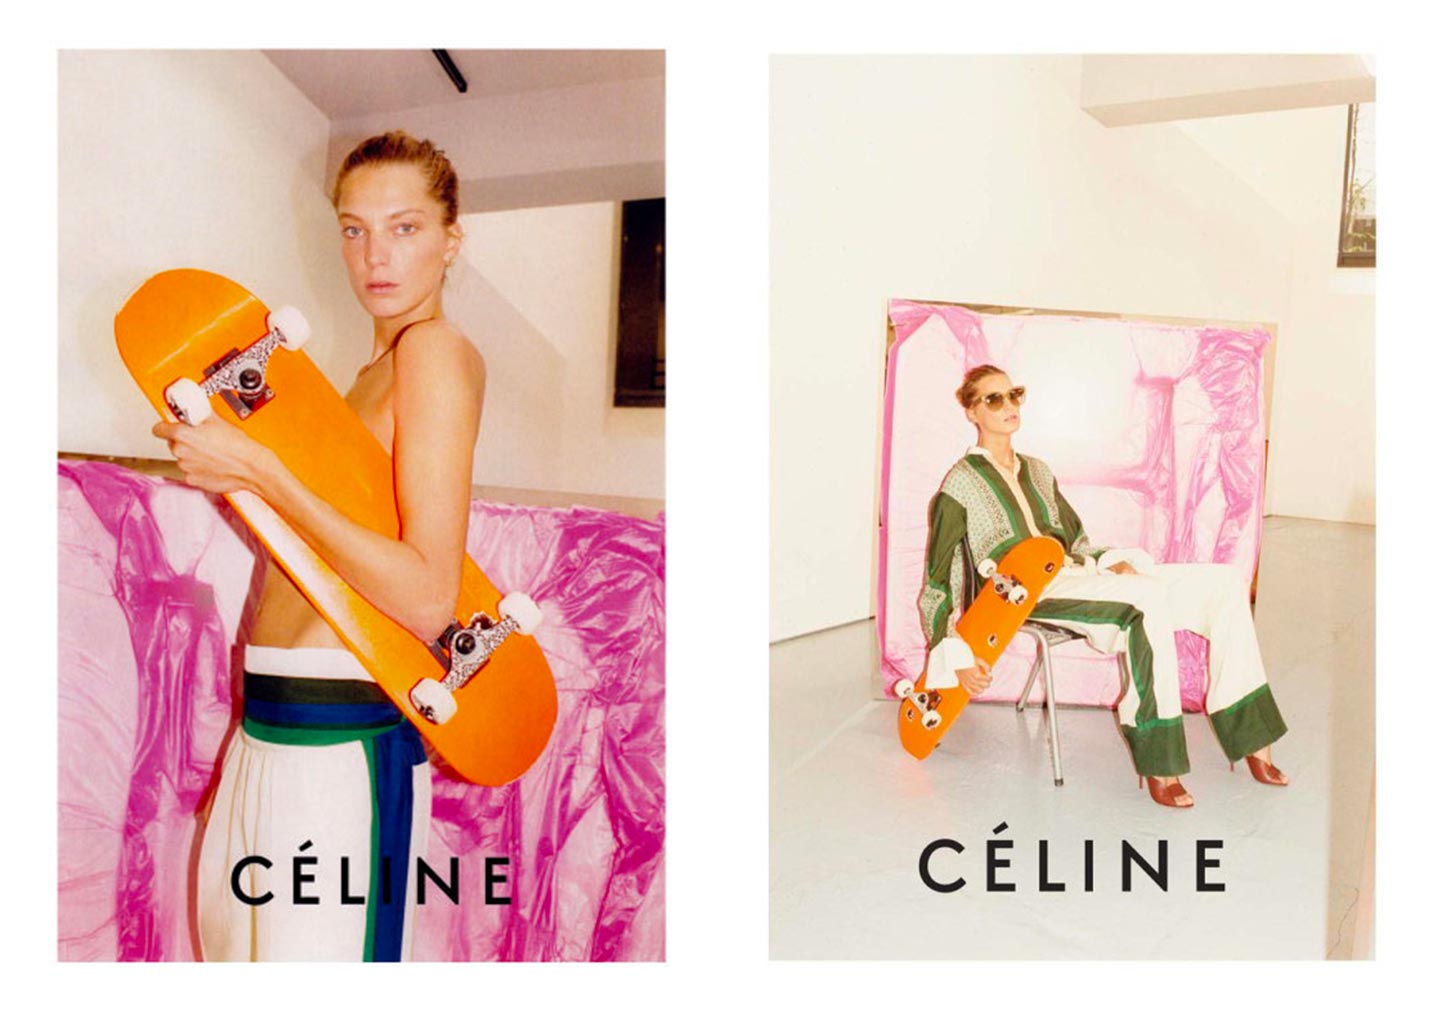 Daria Werbowy's iconic Céline campaigns